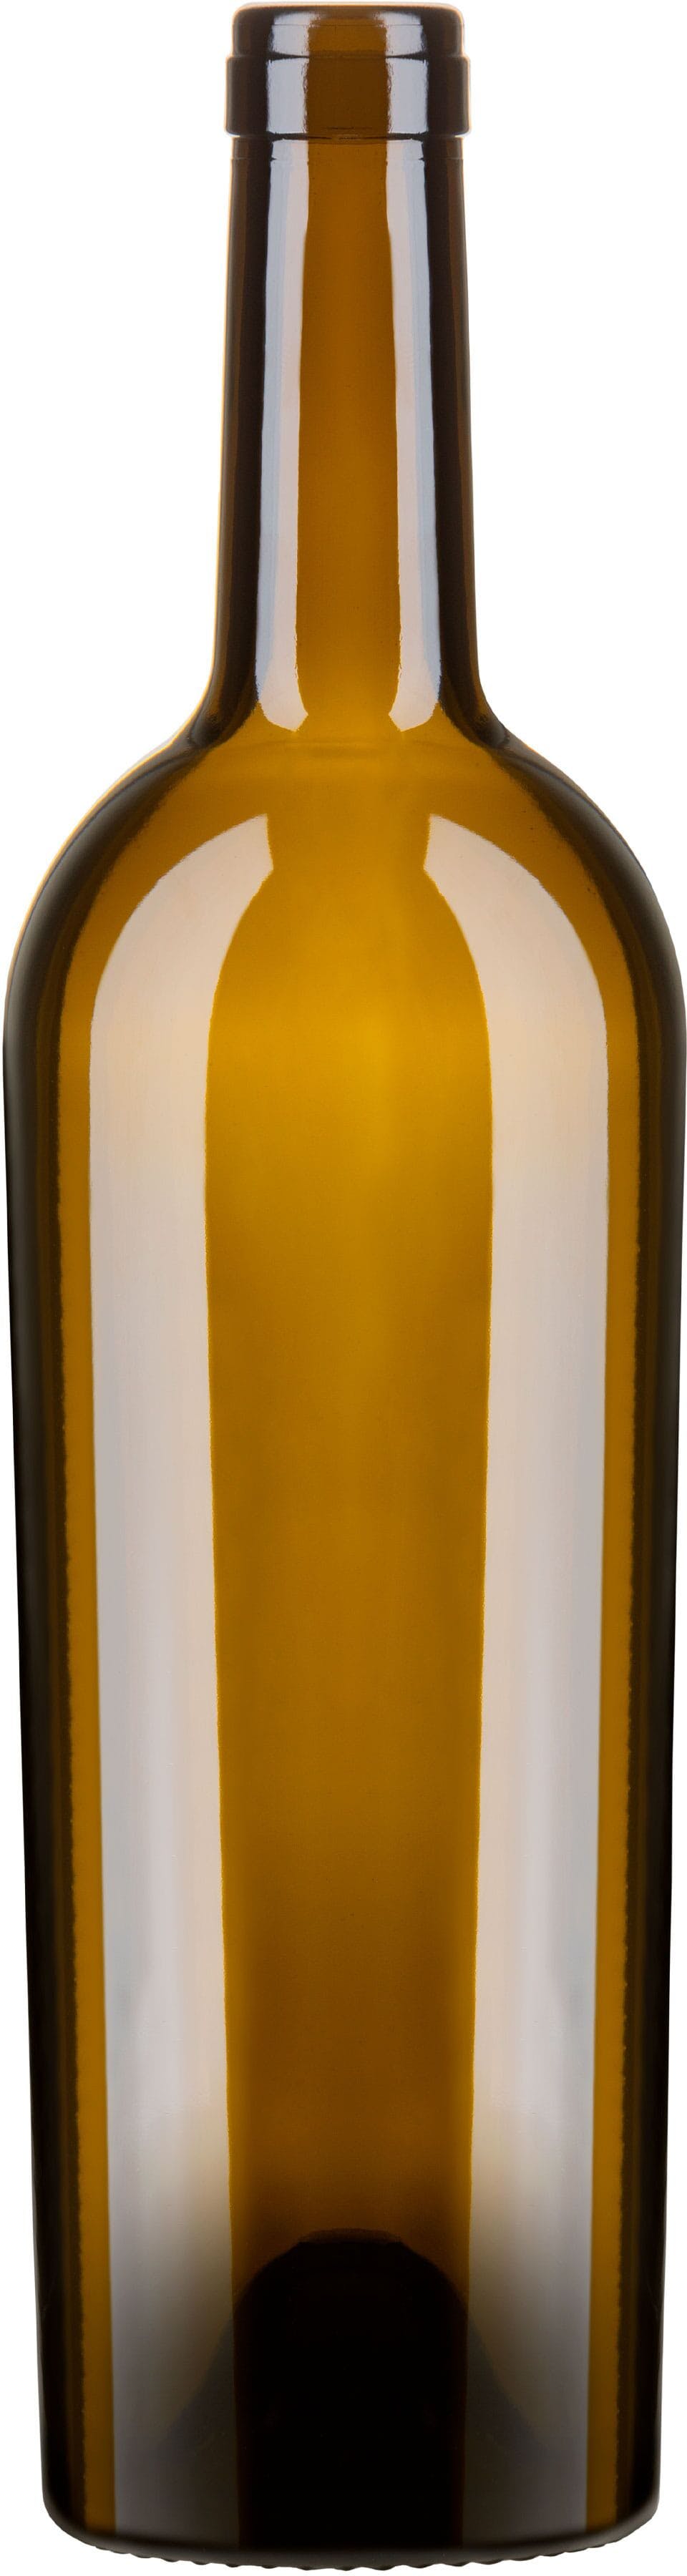 Bottiglia bordolese  ANCIENNE 750 ml BG-Sughero